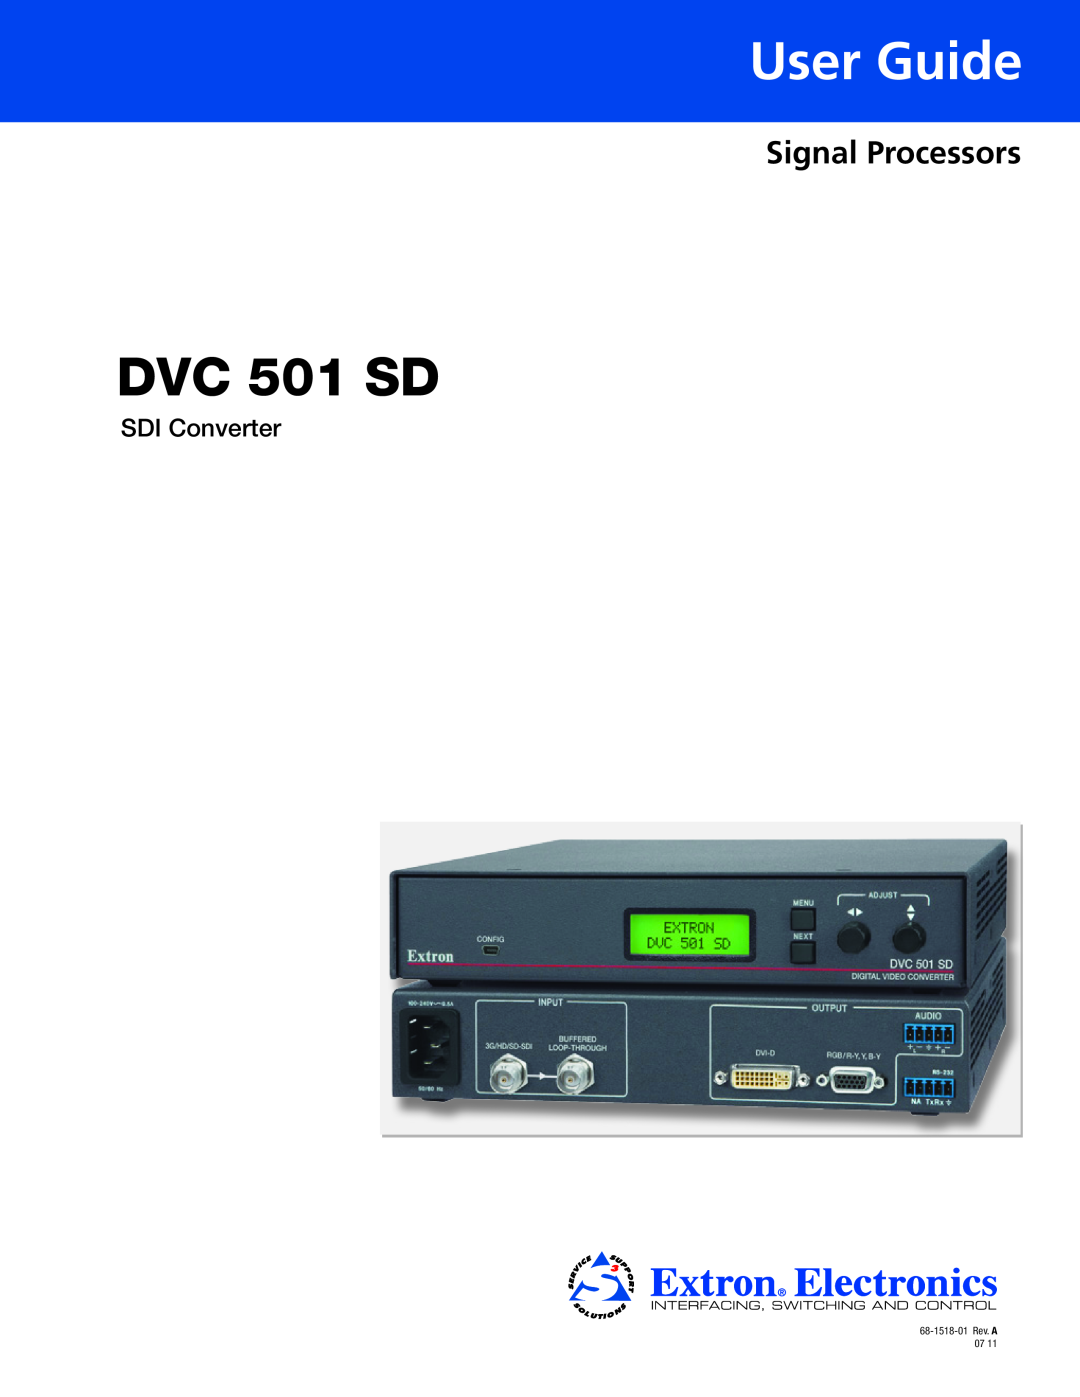 Extron electronic DVC501SD manual DVC 501 SD, User Guide, Signal Processors, SDI Converter, 68-1518-01Rev. A 